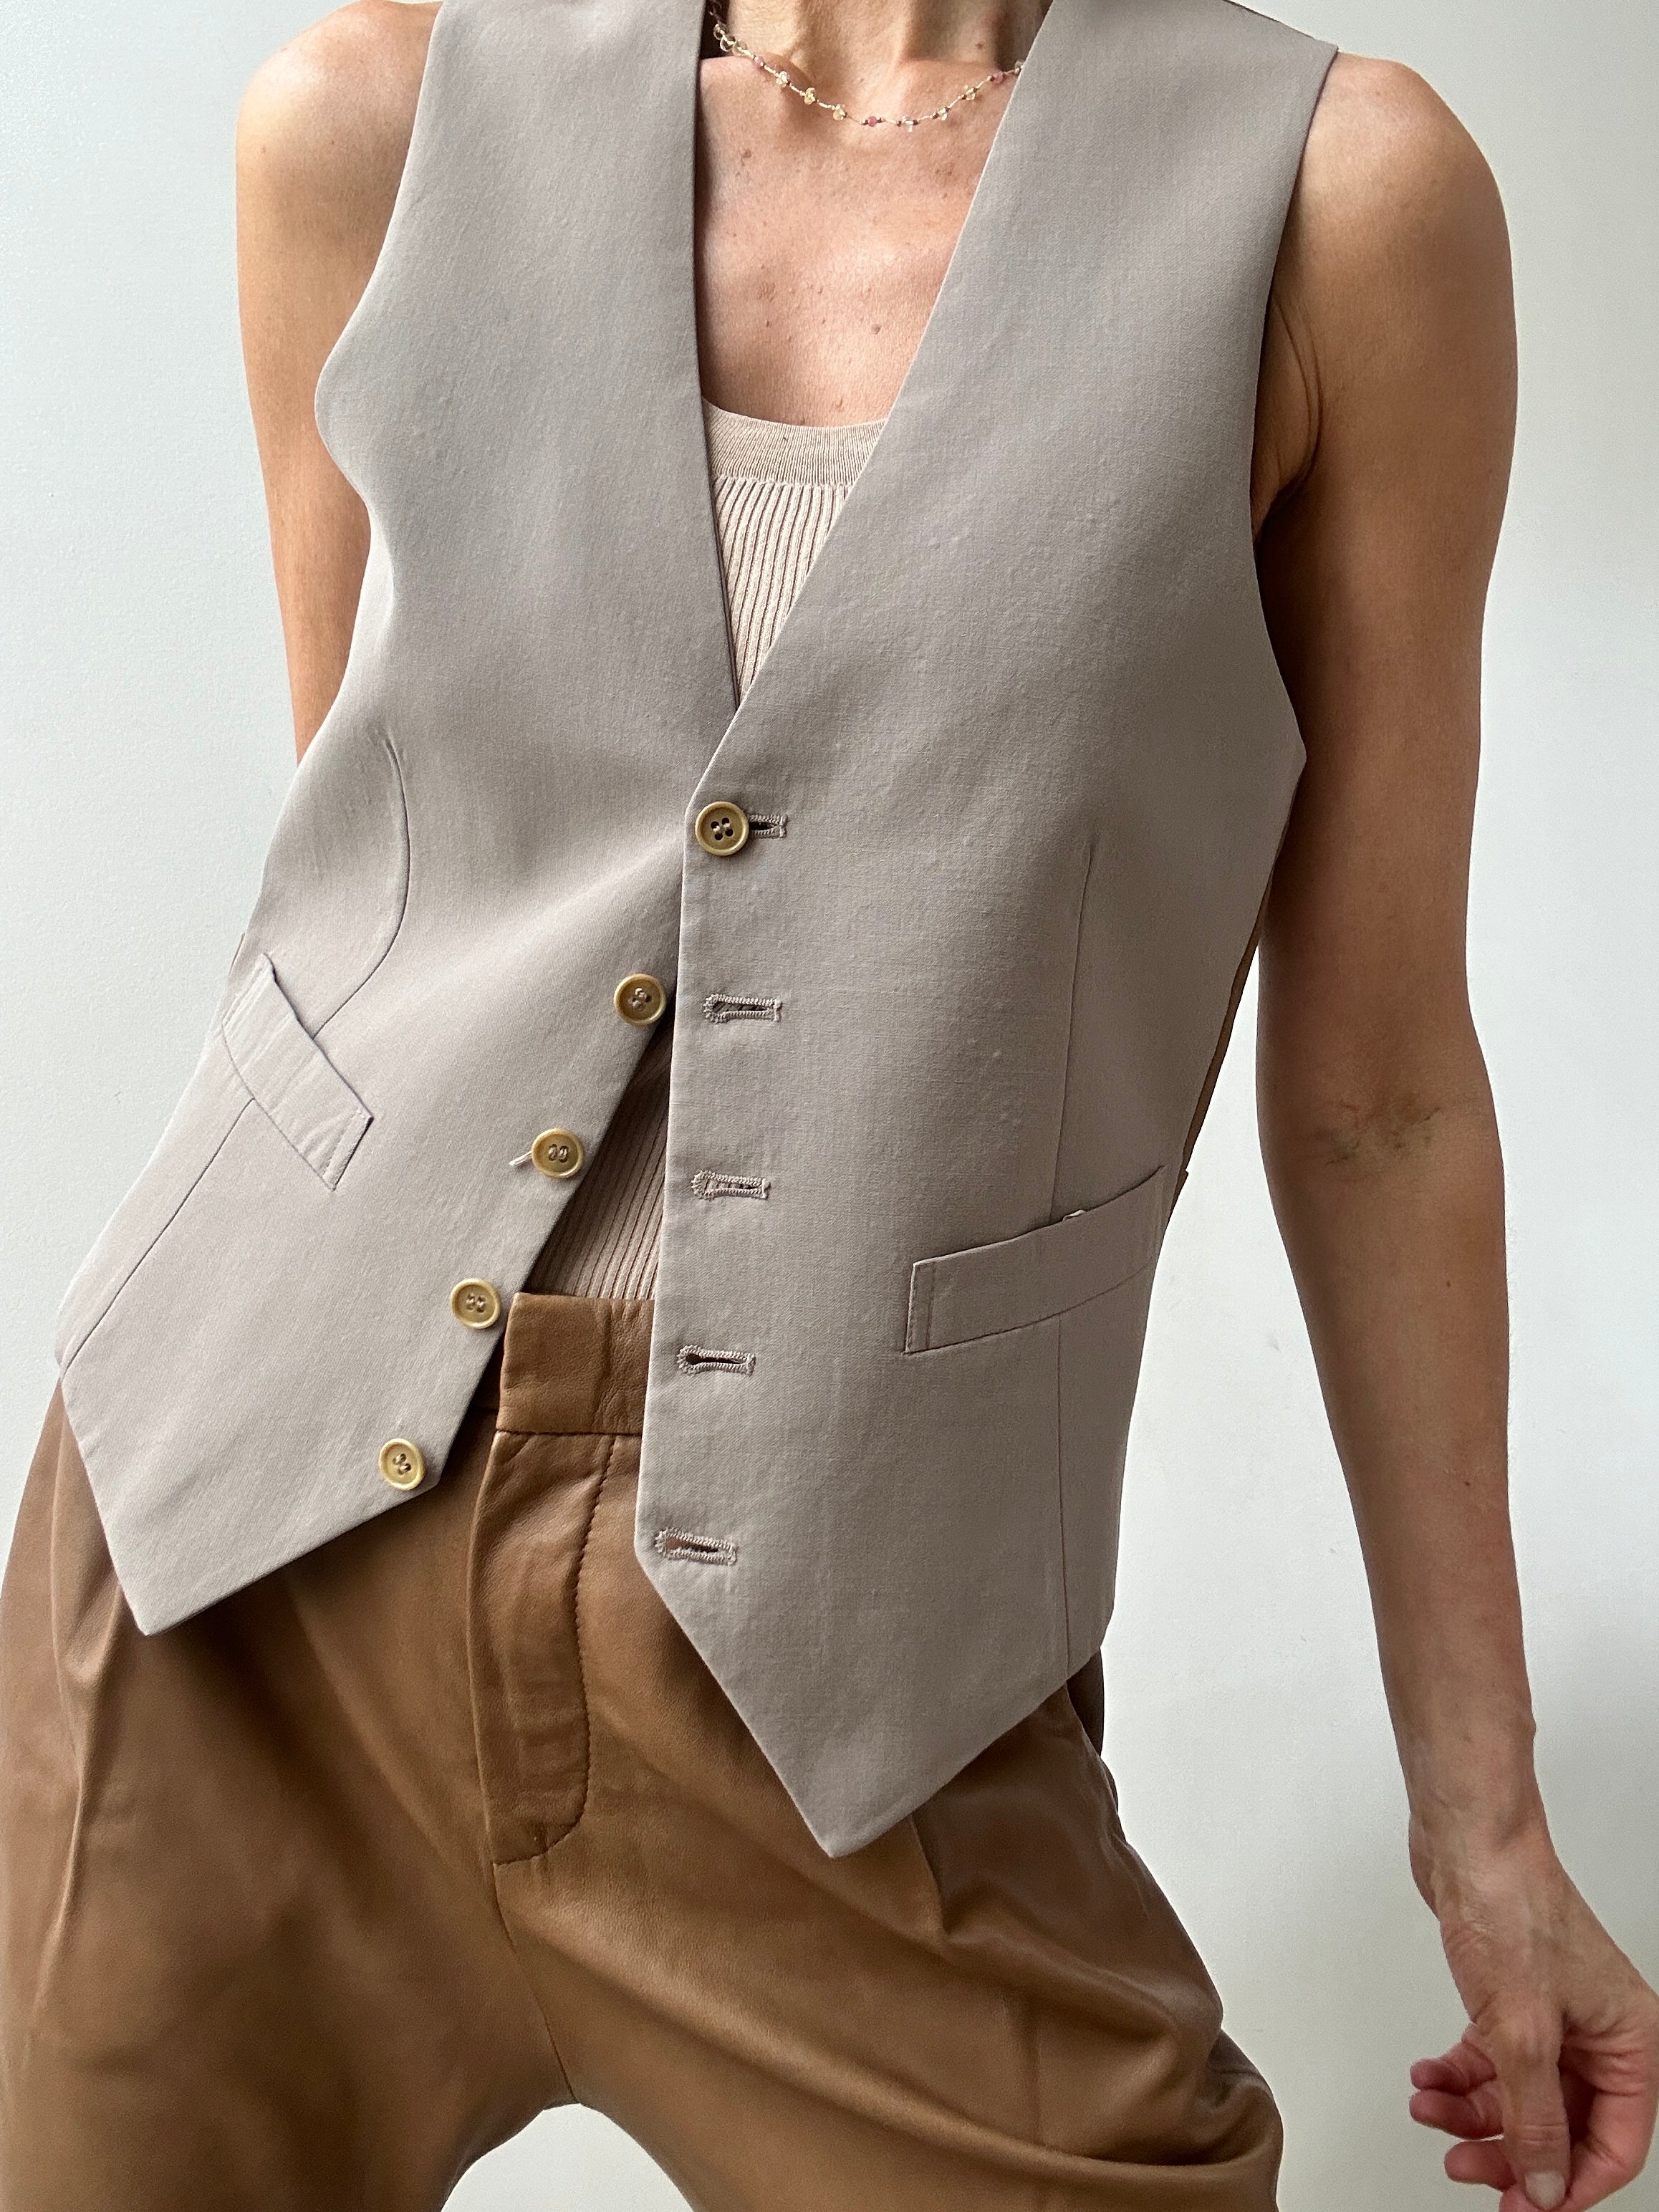 Future Nomads Vests Medium Vintage Suit Vest Grey Beige